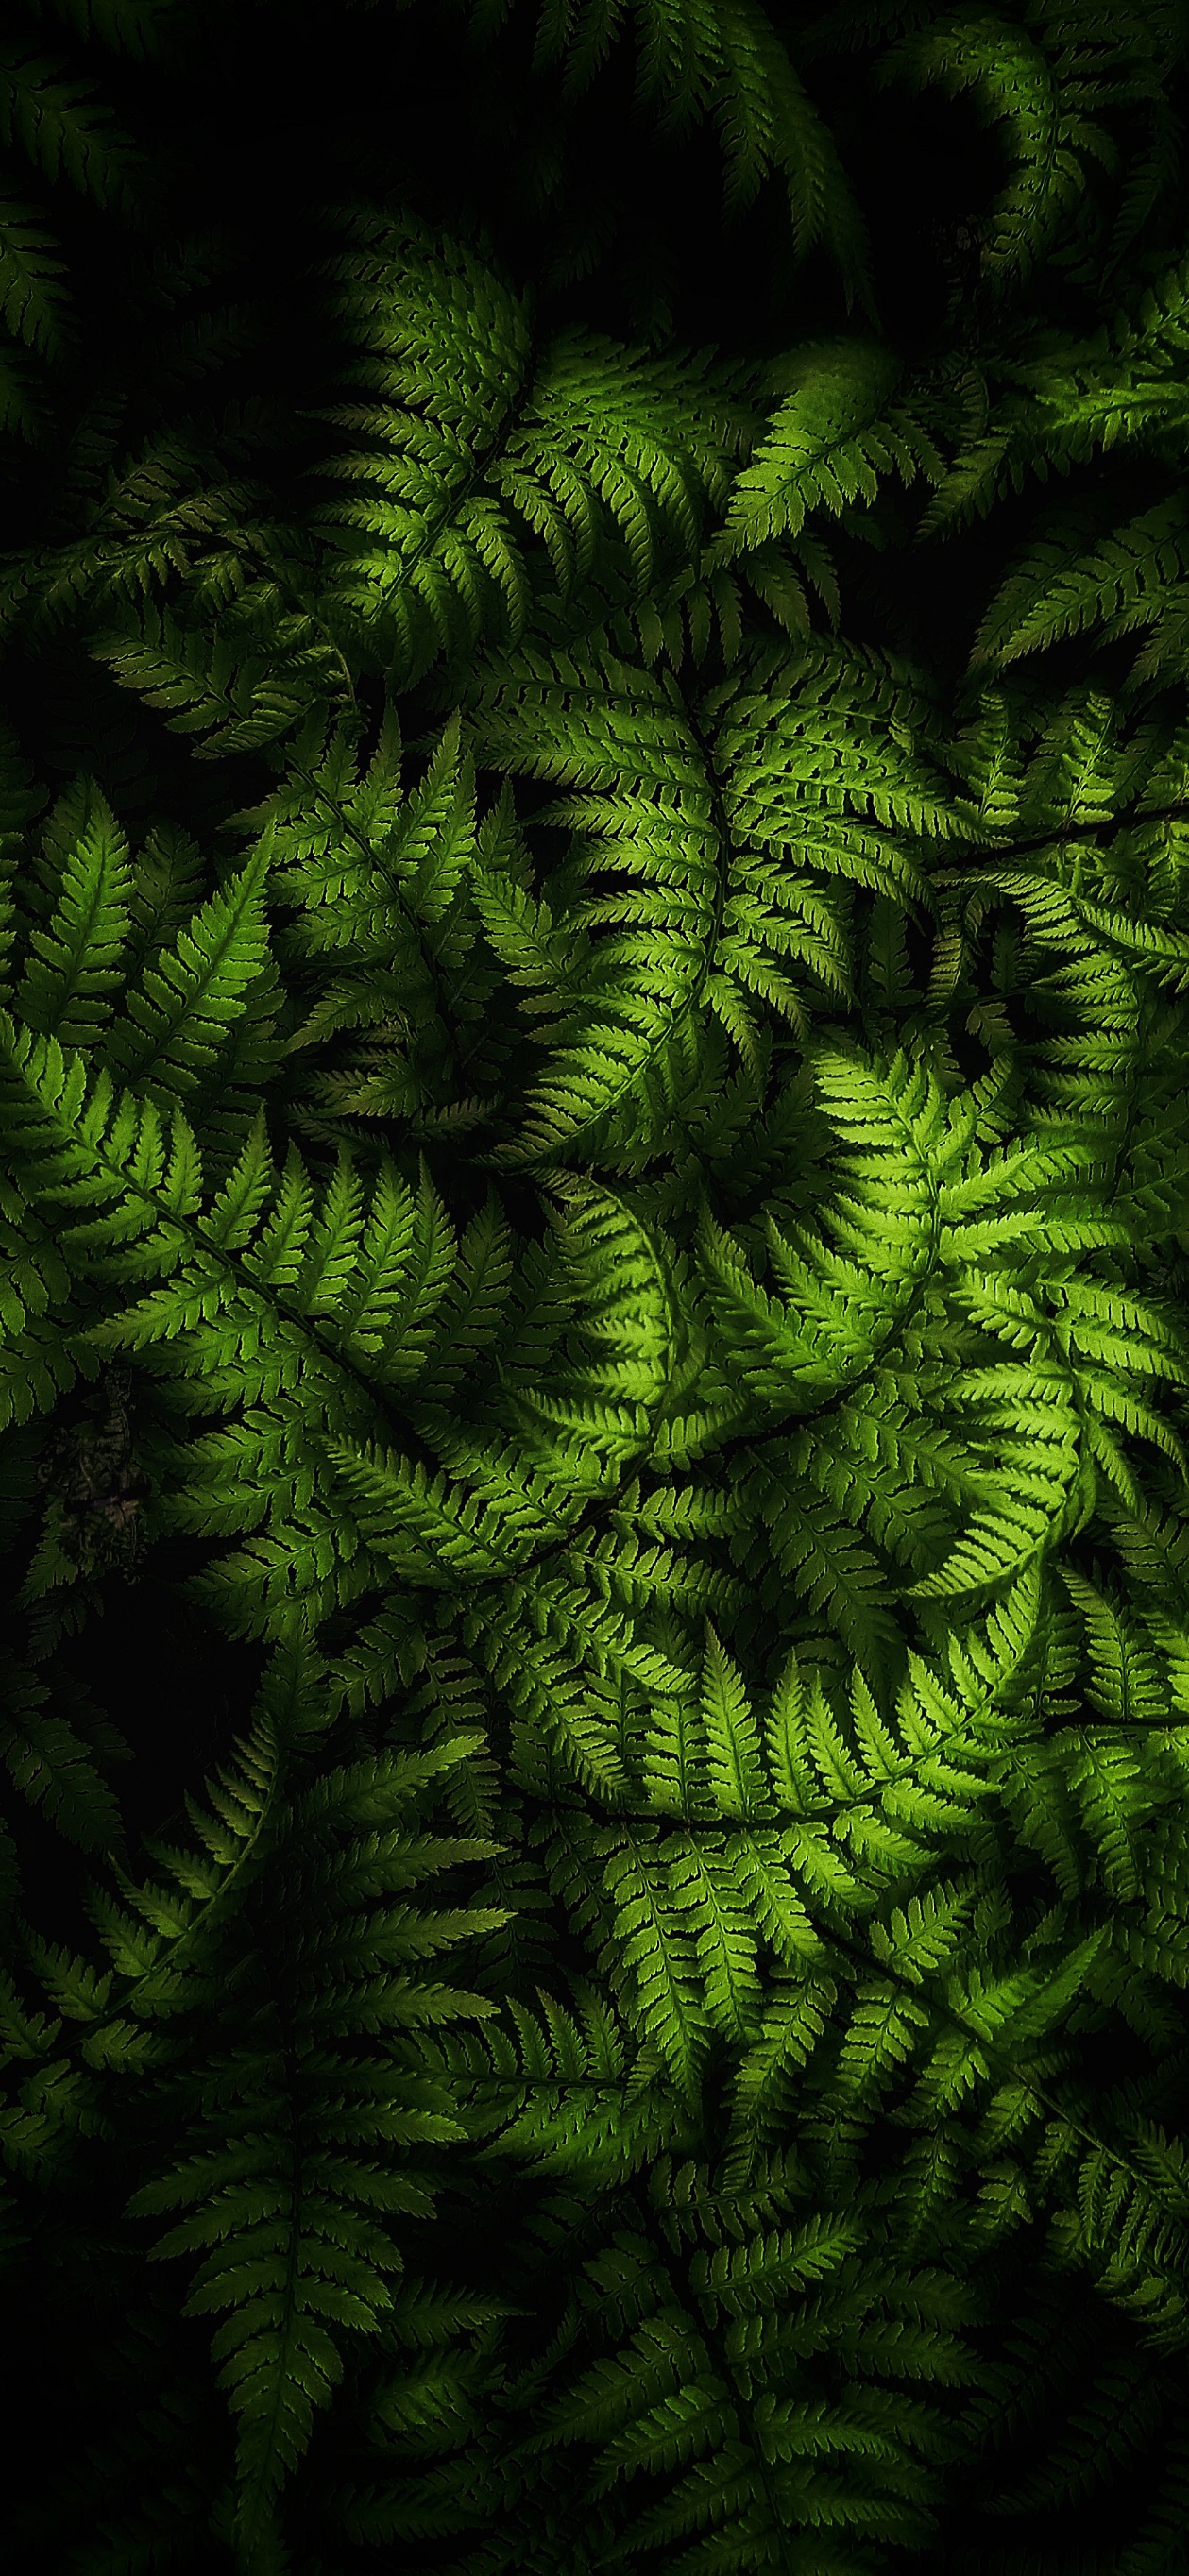 Nature-photography-iPhone-wallpaper-wallsbyjfl-ferns-highlight